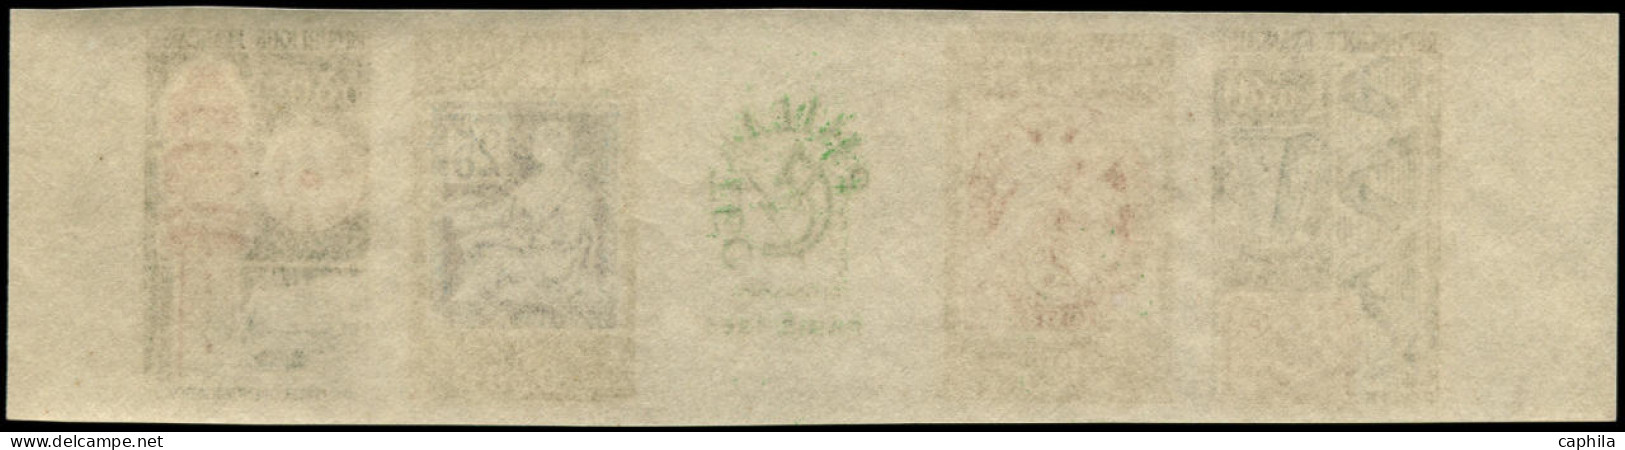 ** FRANCE - Non Dentelés - 1417Aa, Bande Complète: Expo Philatec - Unused Stamps